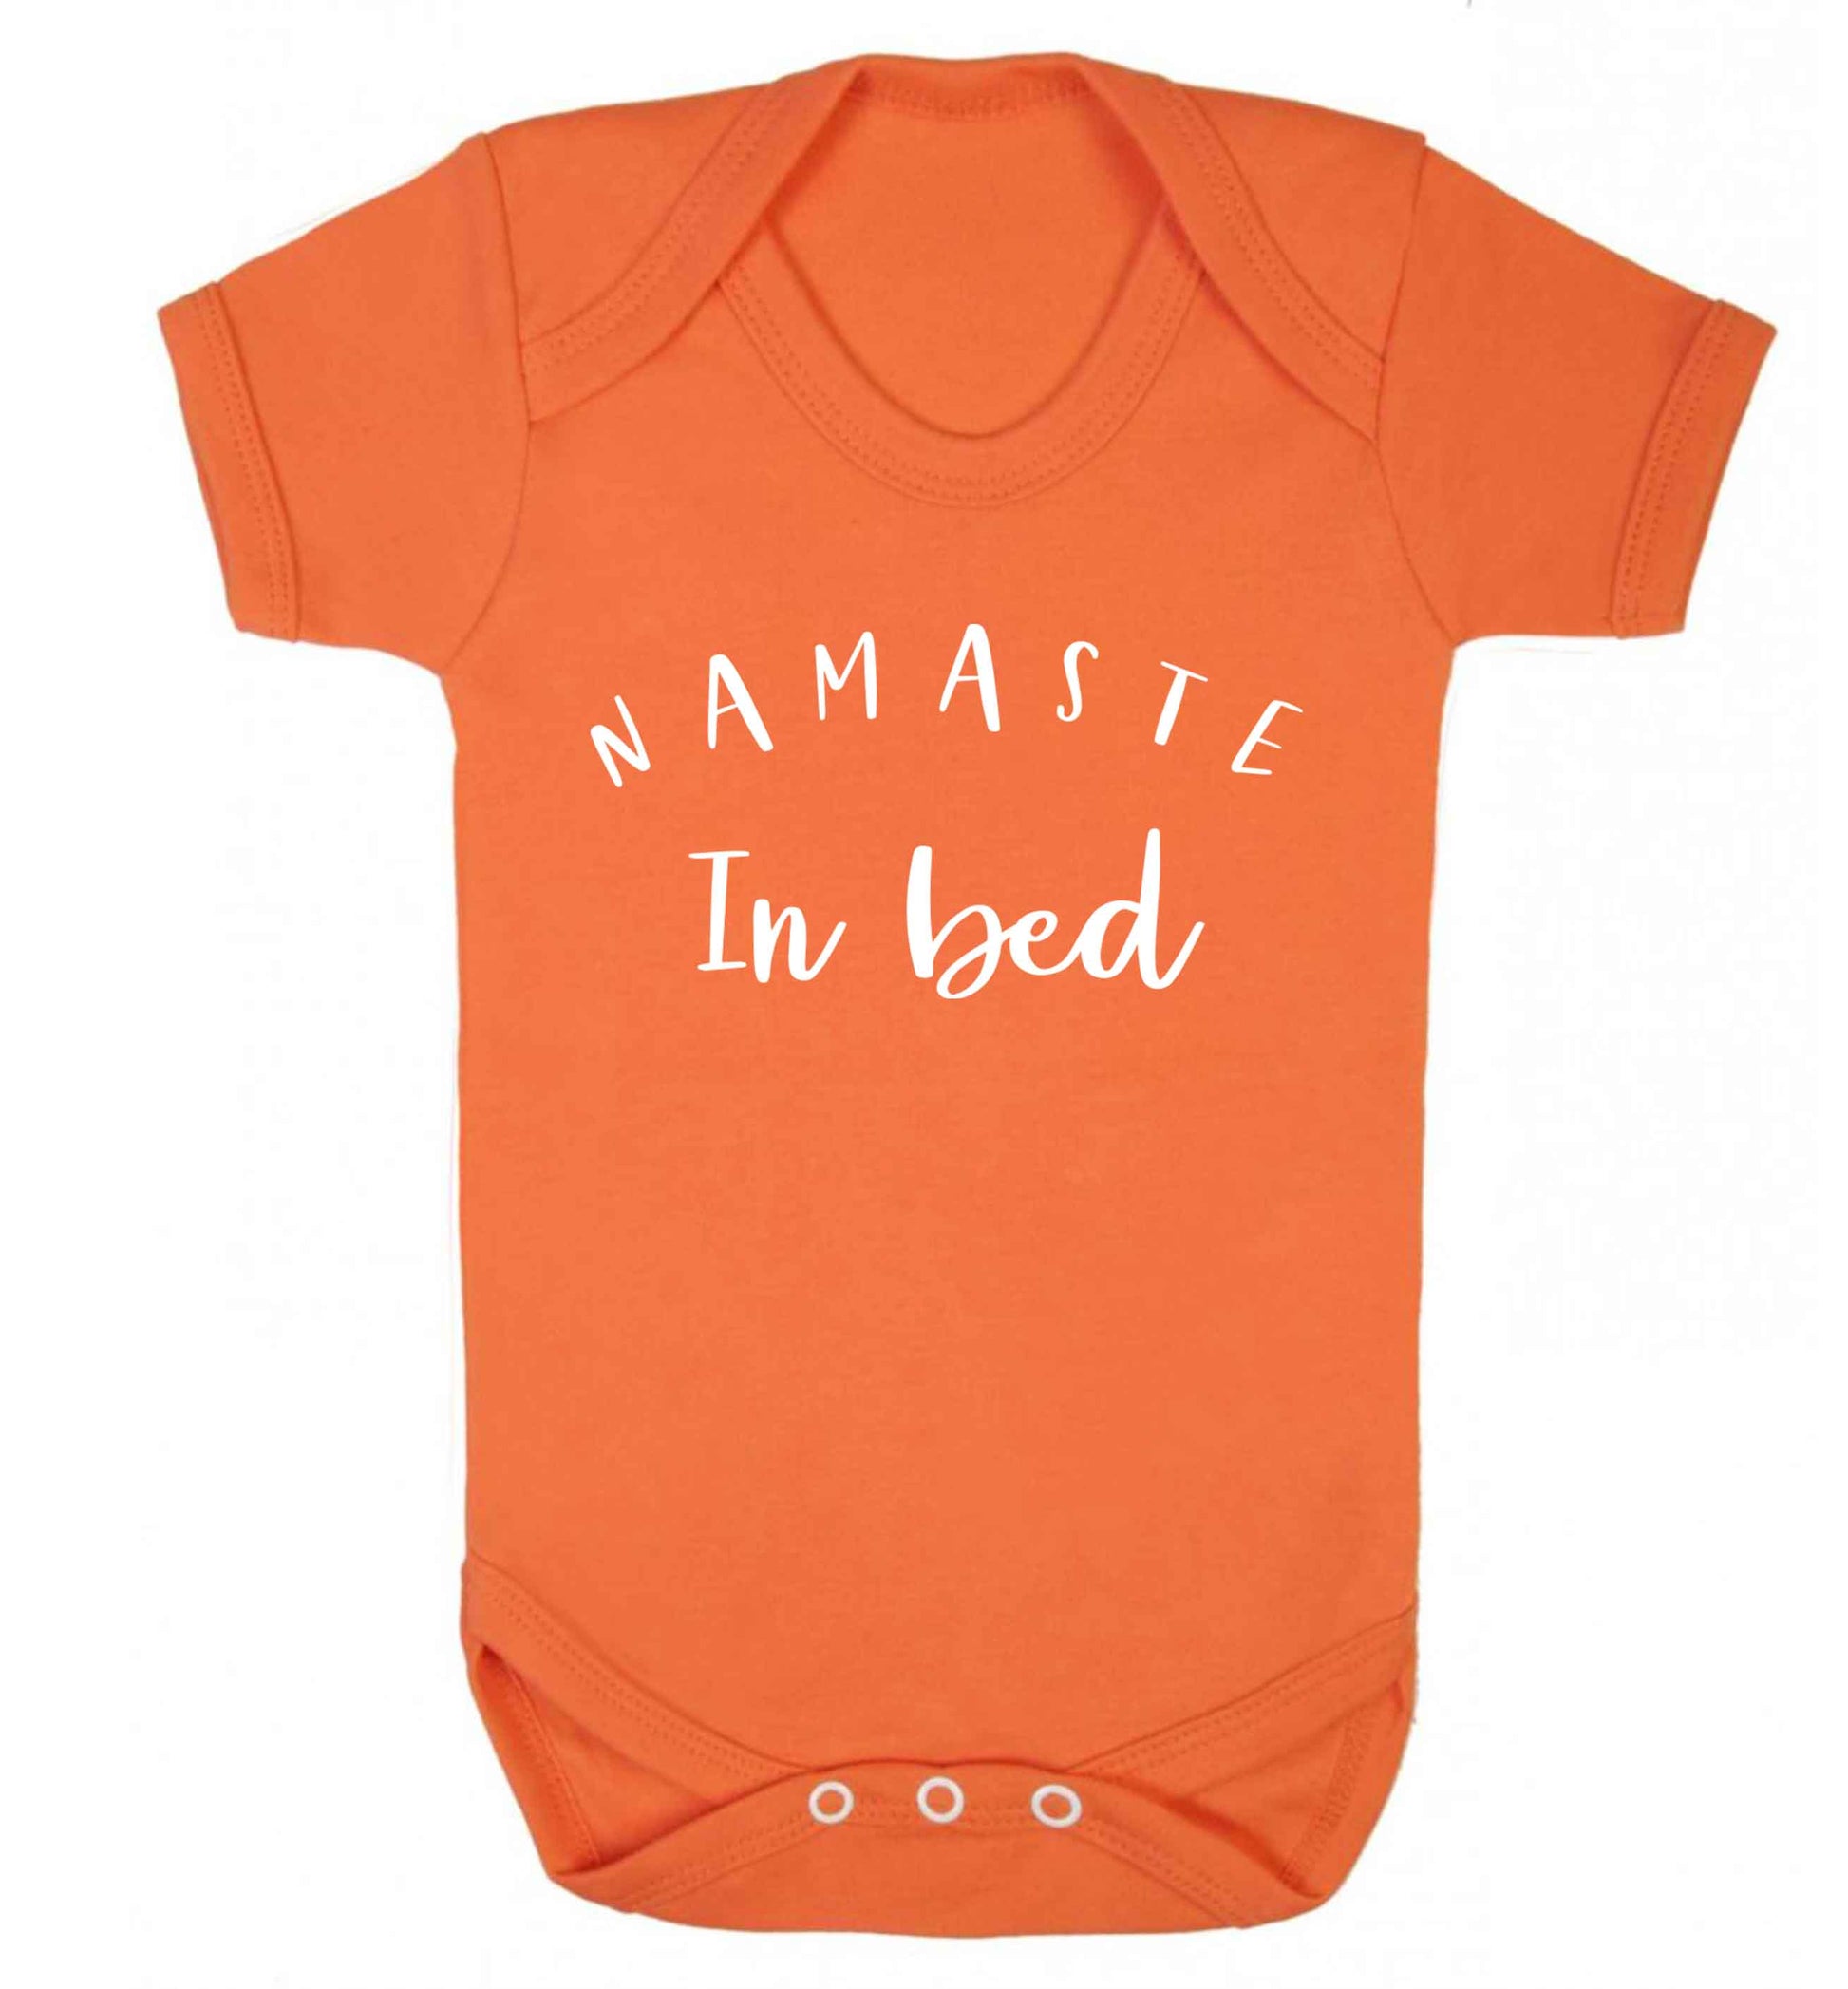 Namaste in bed Baby Vest orange 18-24 months